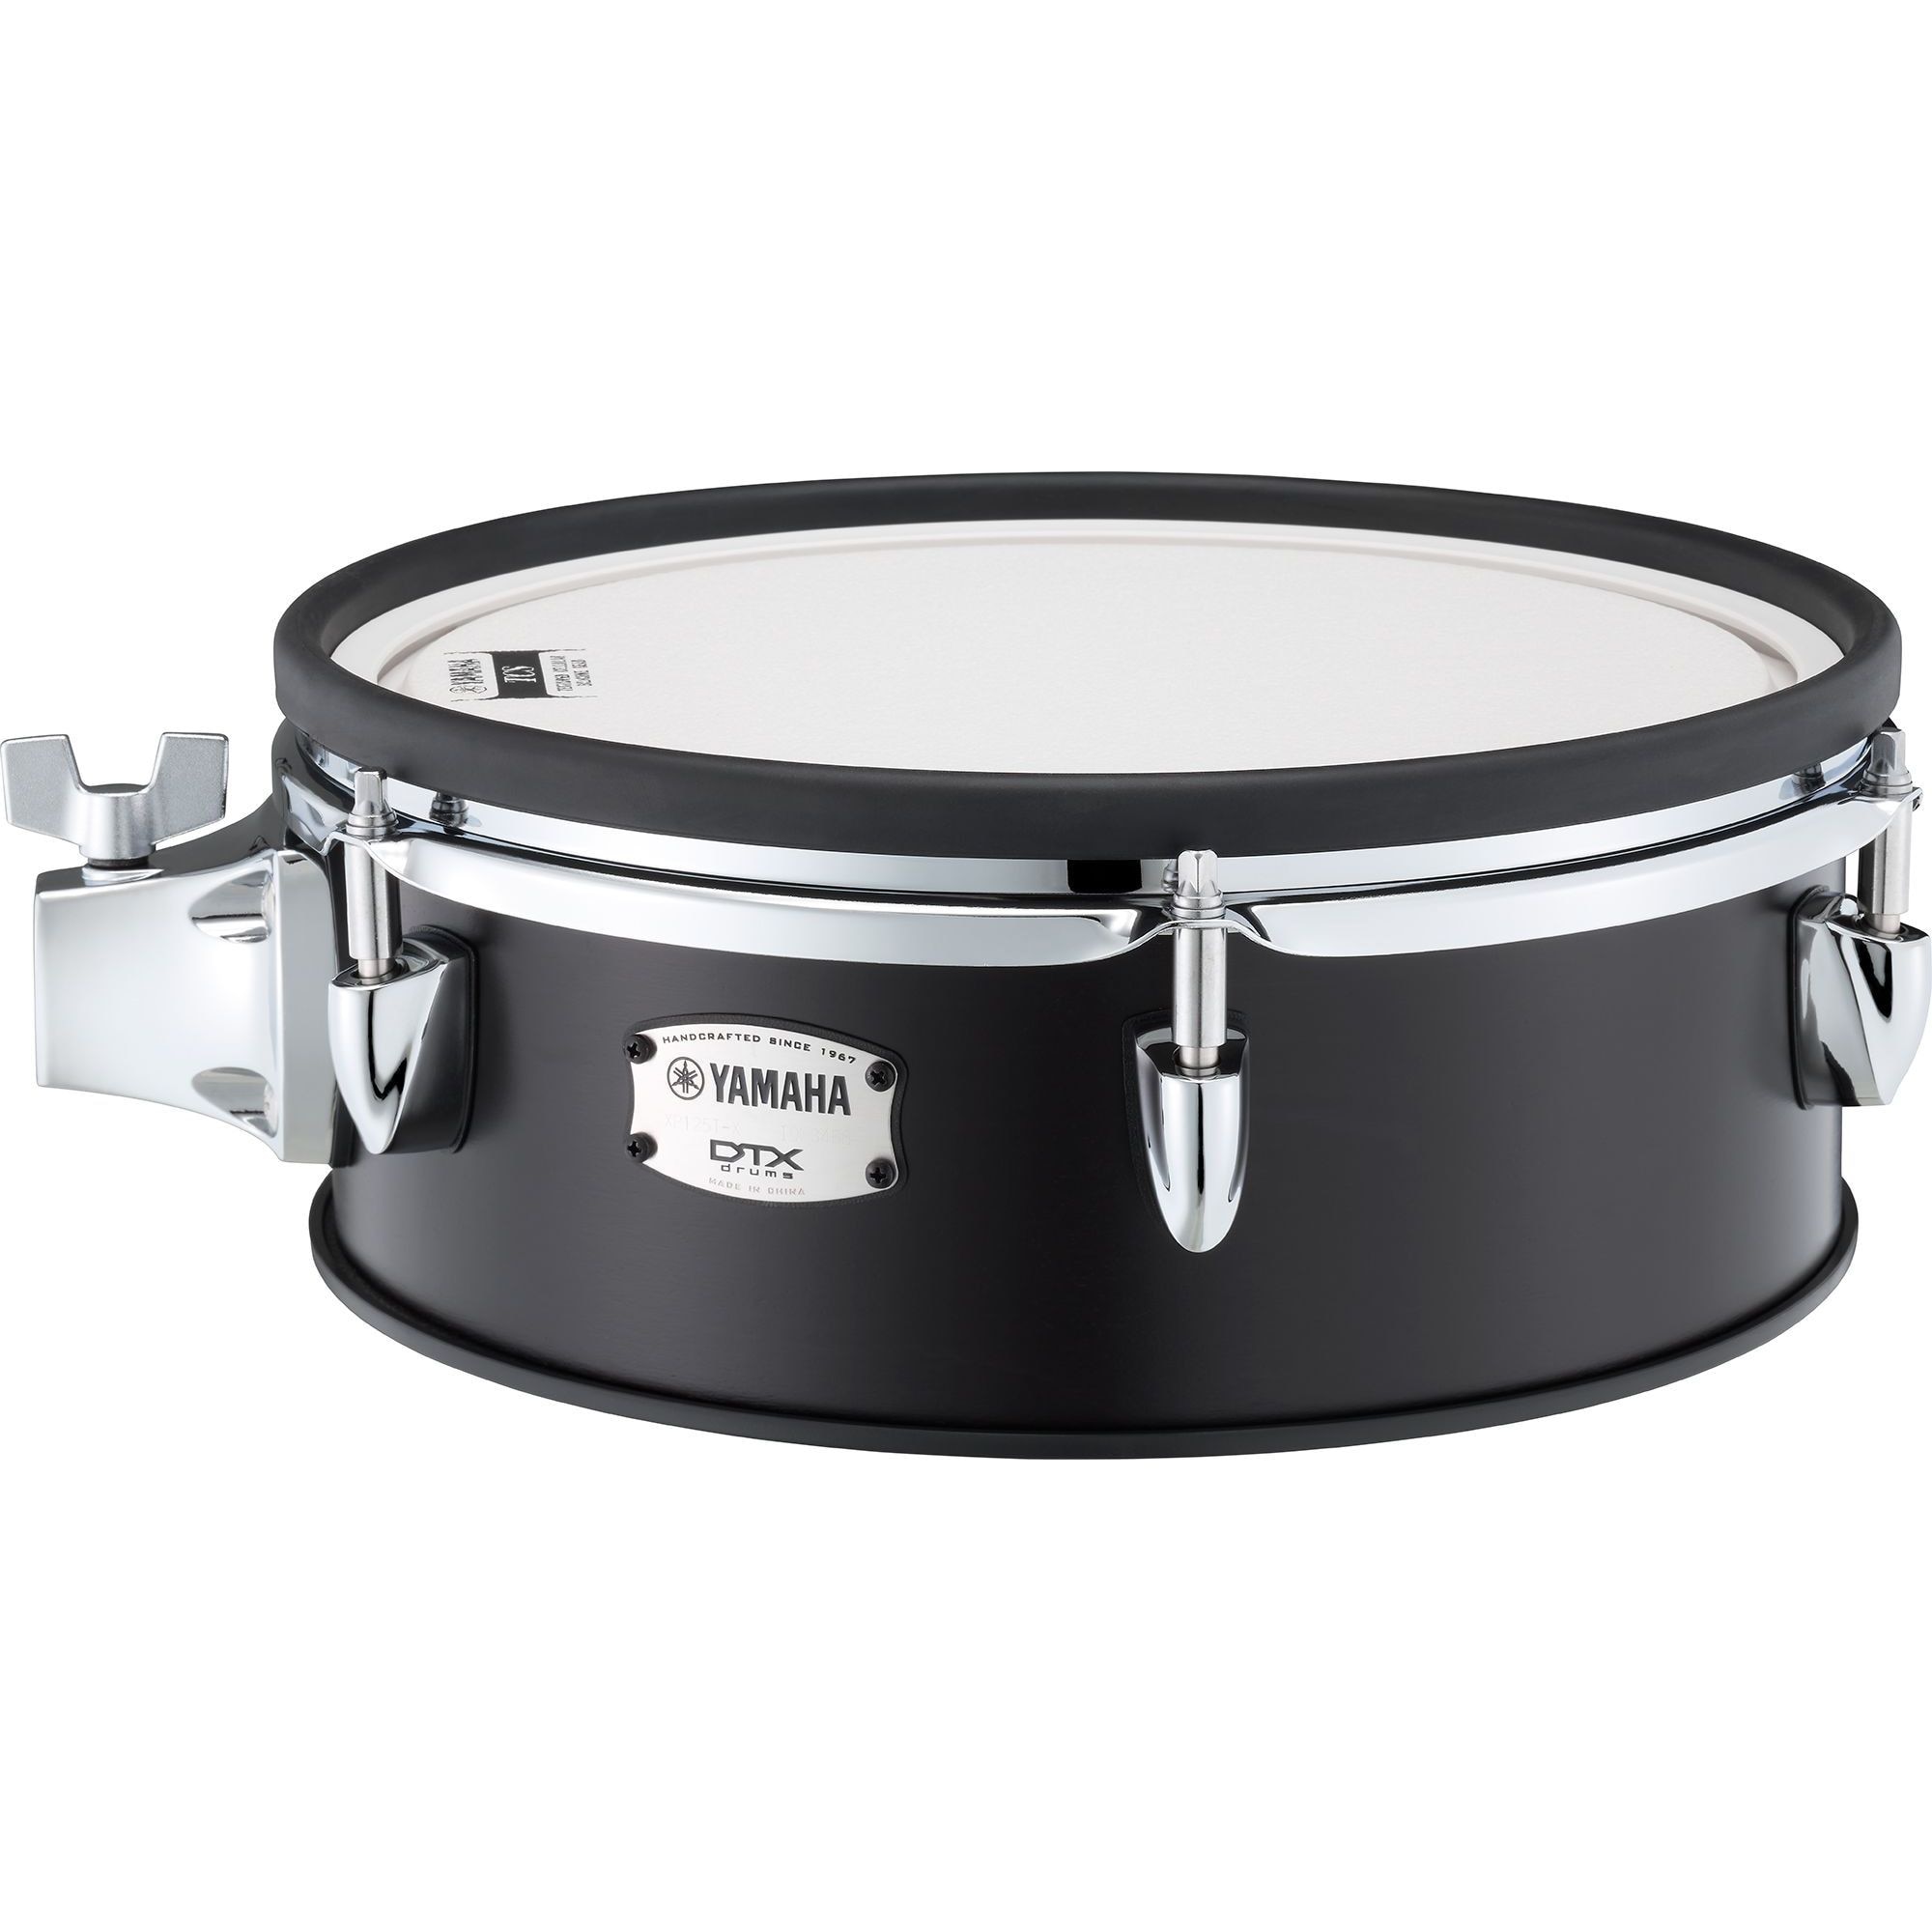 XP125T-X DTX Electronic Drum Pads- Yamaha USA